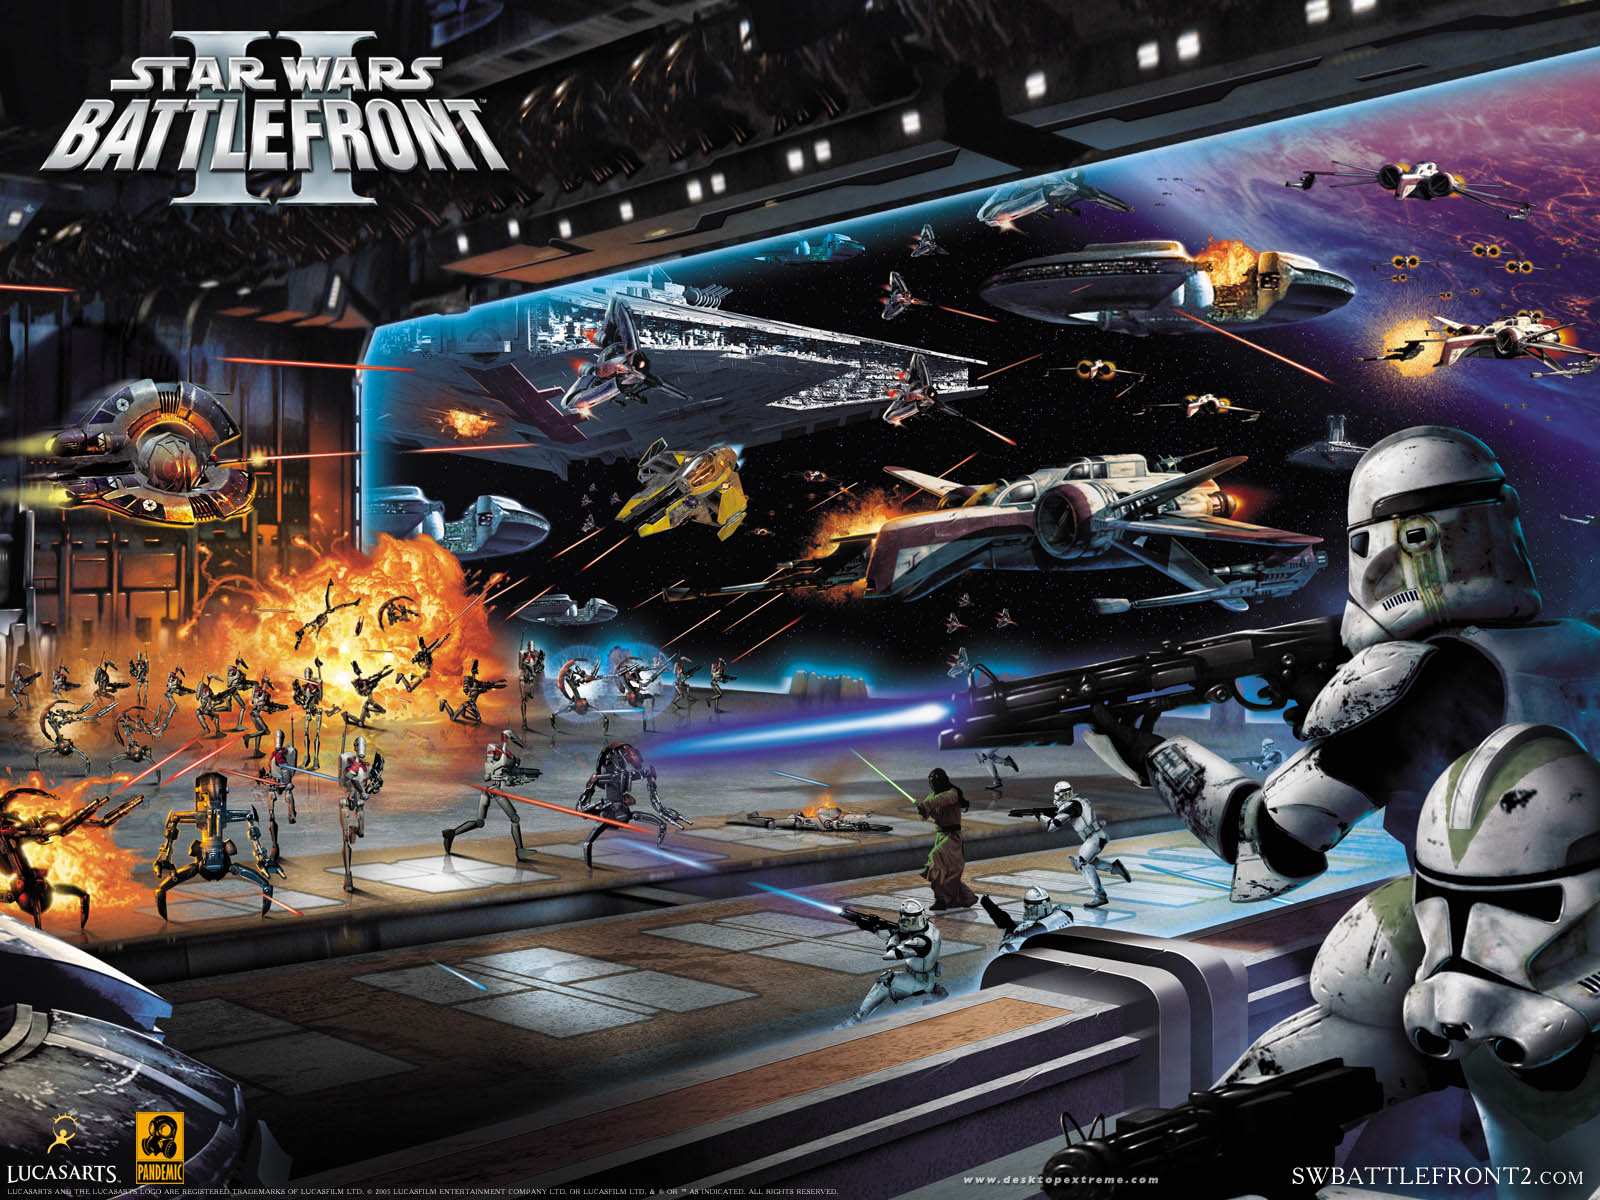 Star Wars Battlefront 2 Cross-Platform - Is It